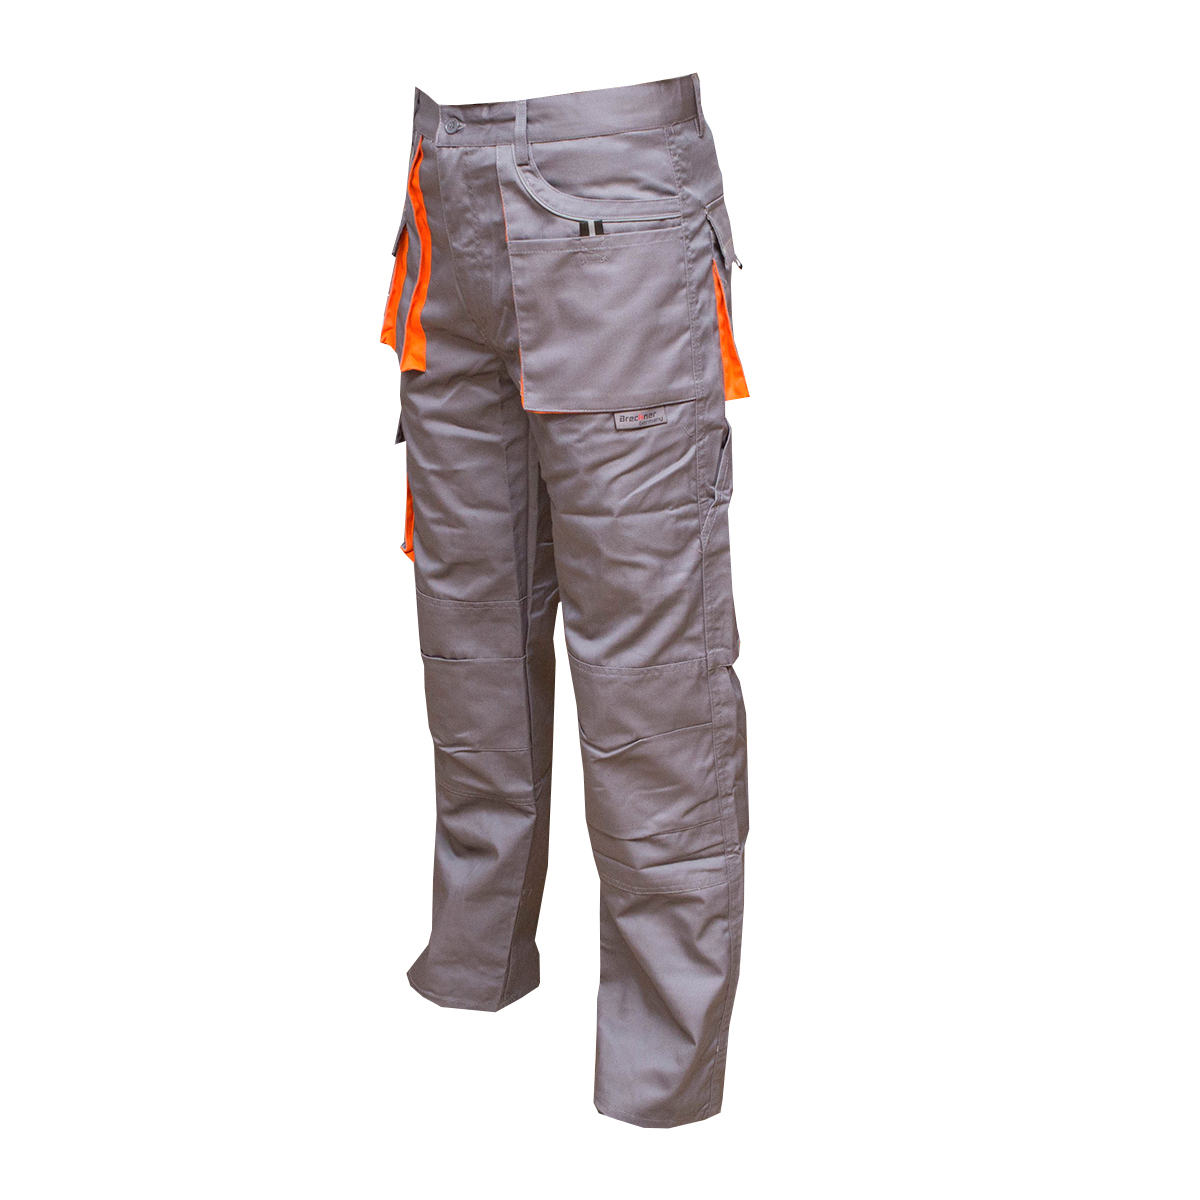 Pantaloni de lucru poliester cu bumbac 235g/m2, gri cu portocaliu marimea 56 Breckner Germany